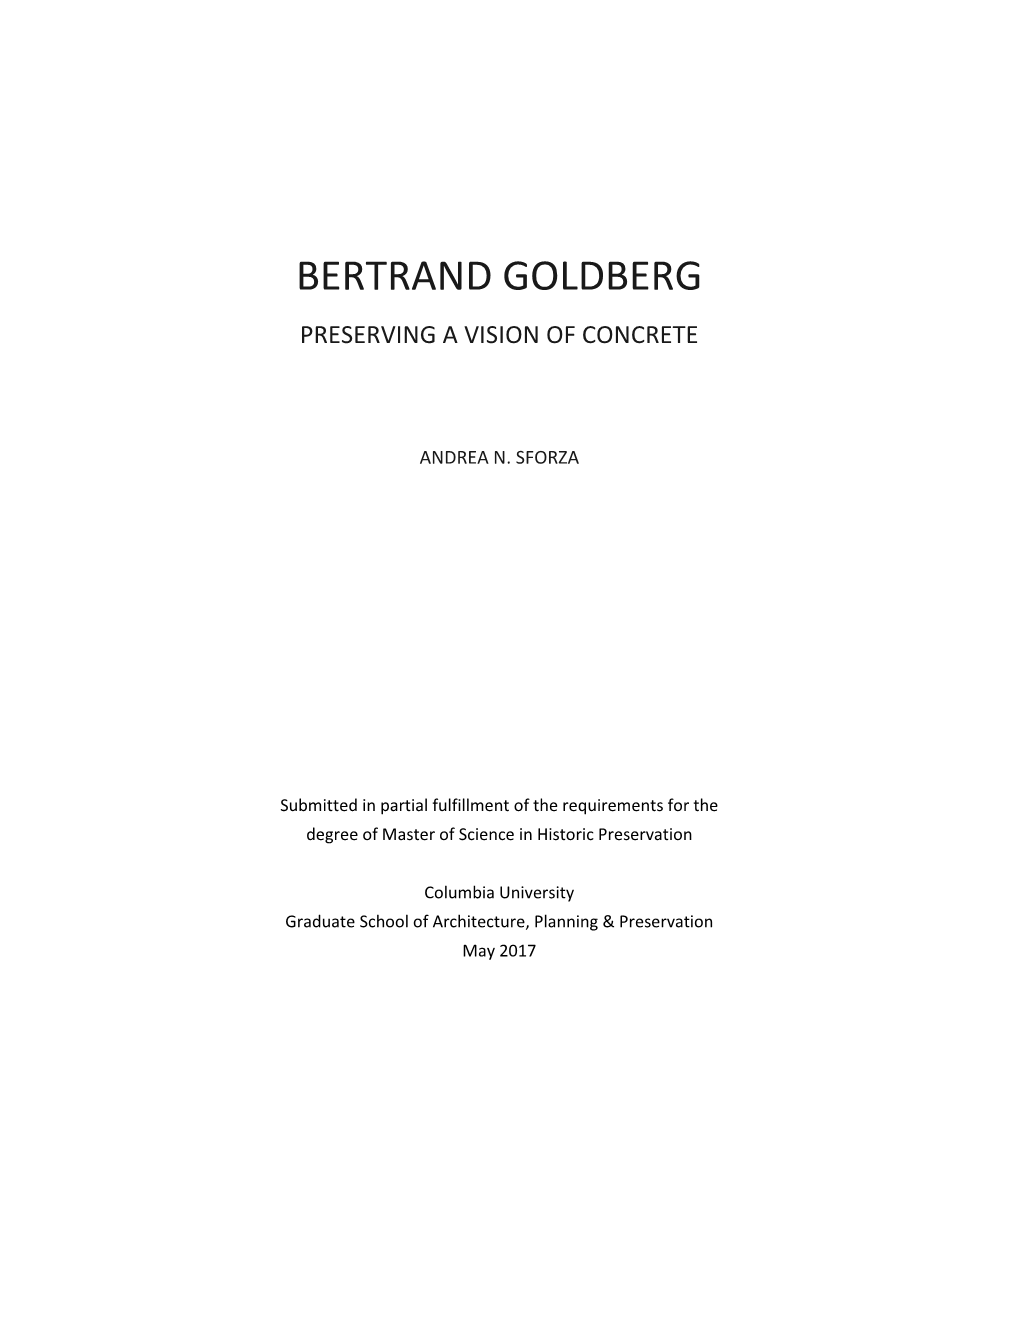 Bertrand Goldberg Preserving a Vision of Concrete